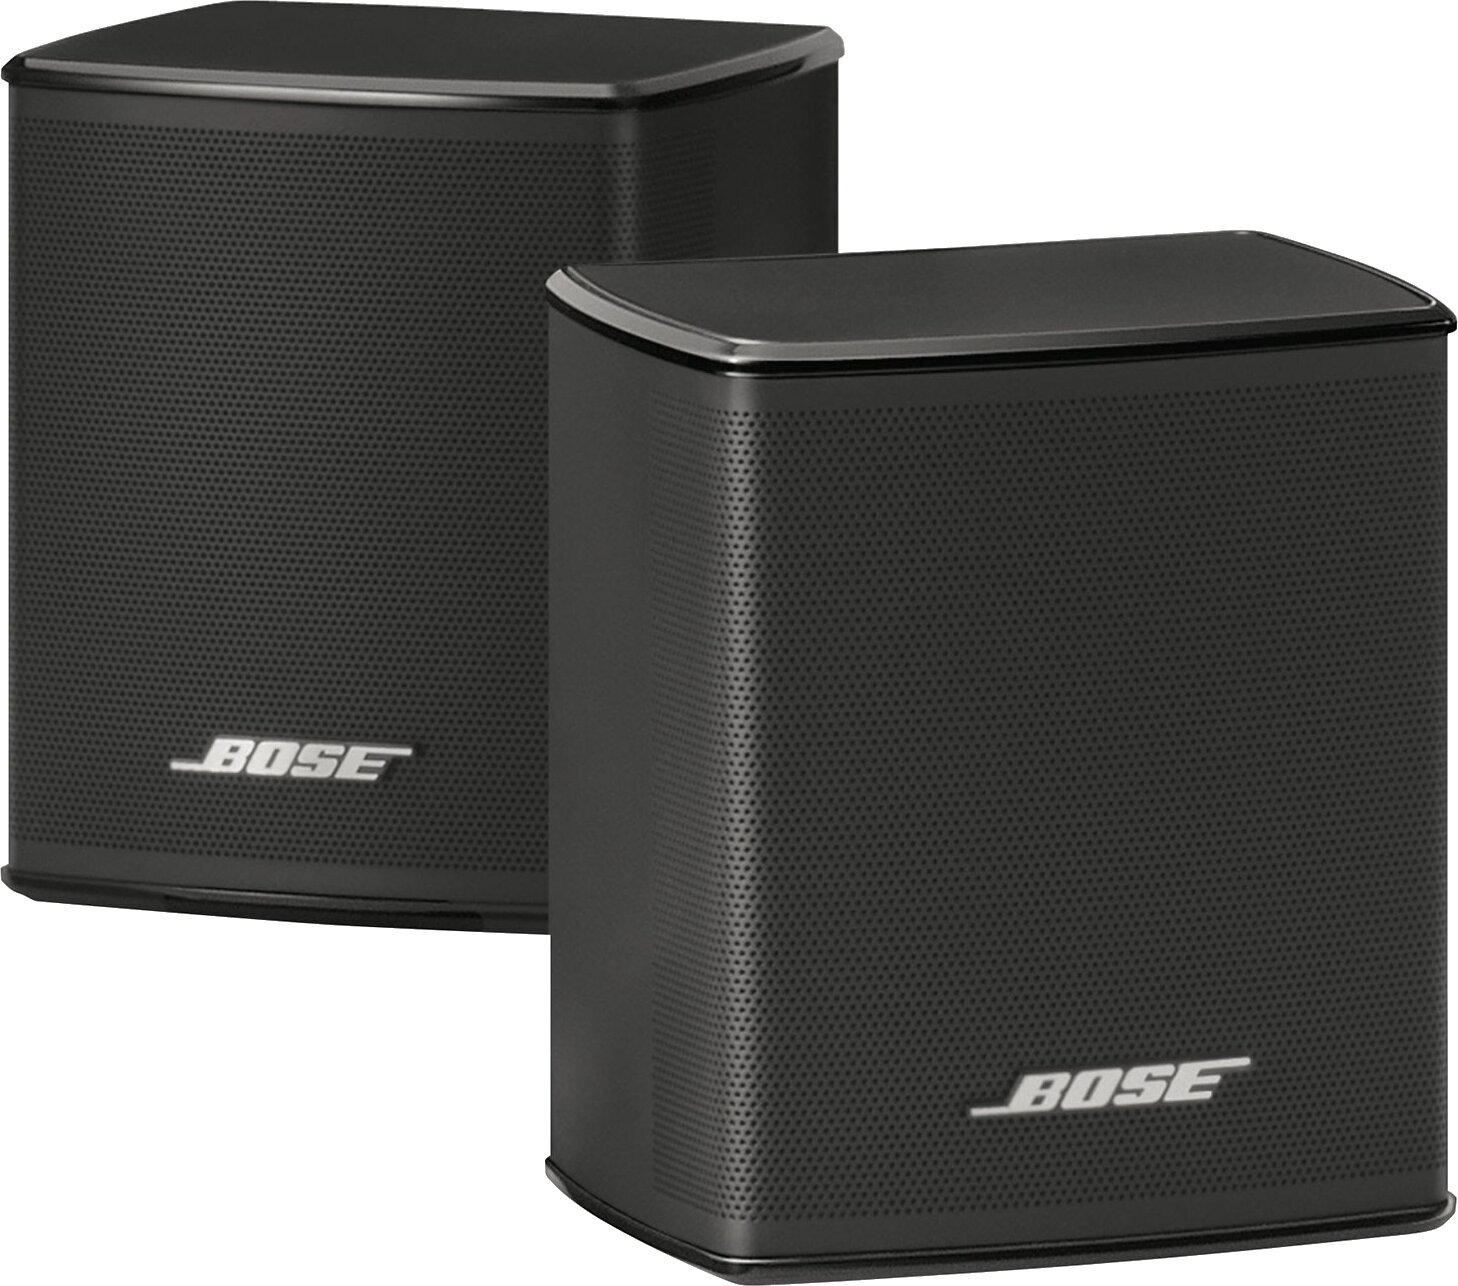 Hi-Fi On-Wall speaker Bose Surround Speakers Black